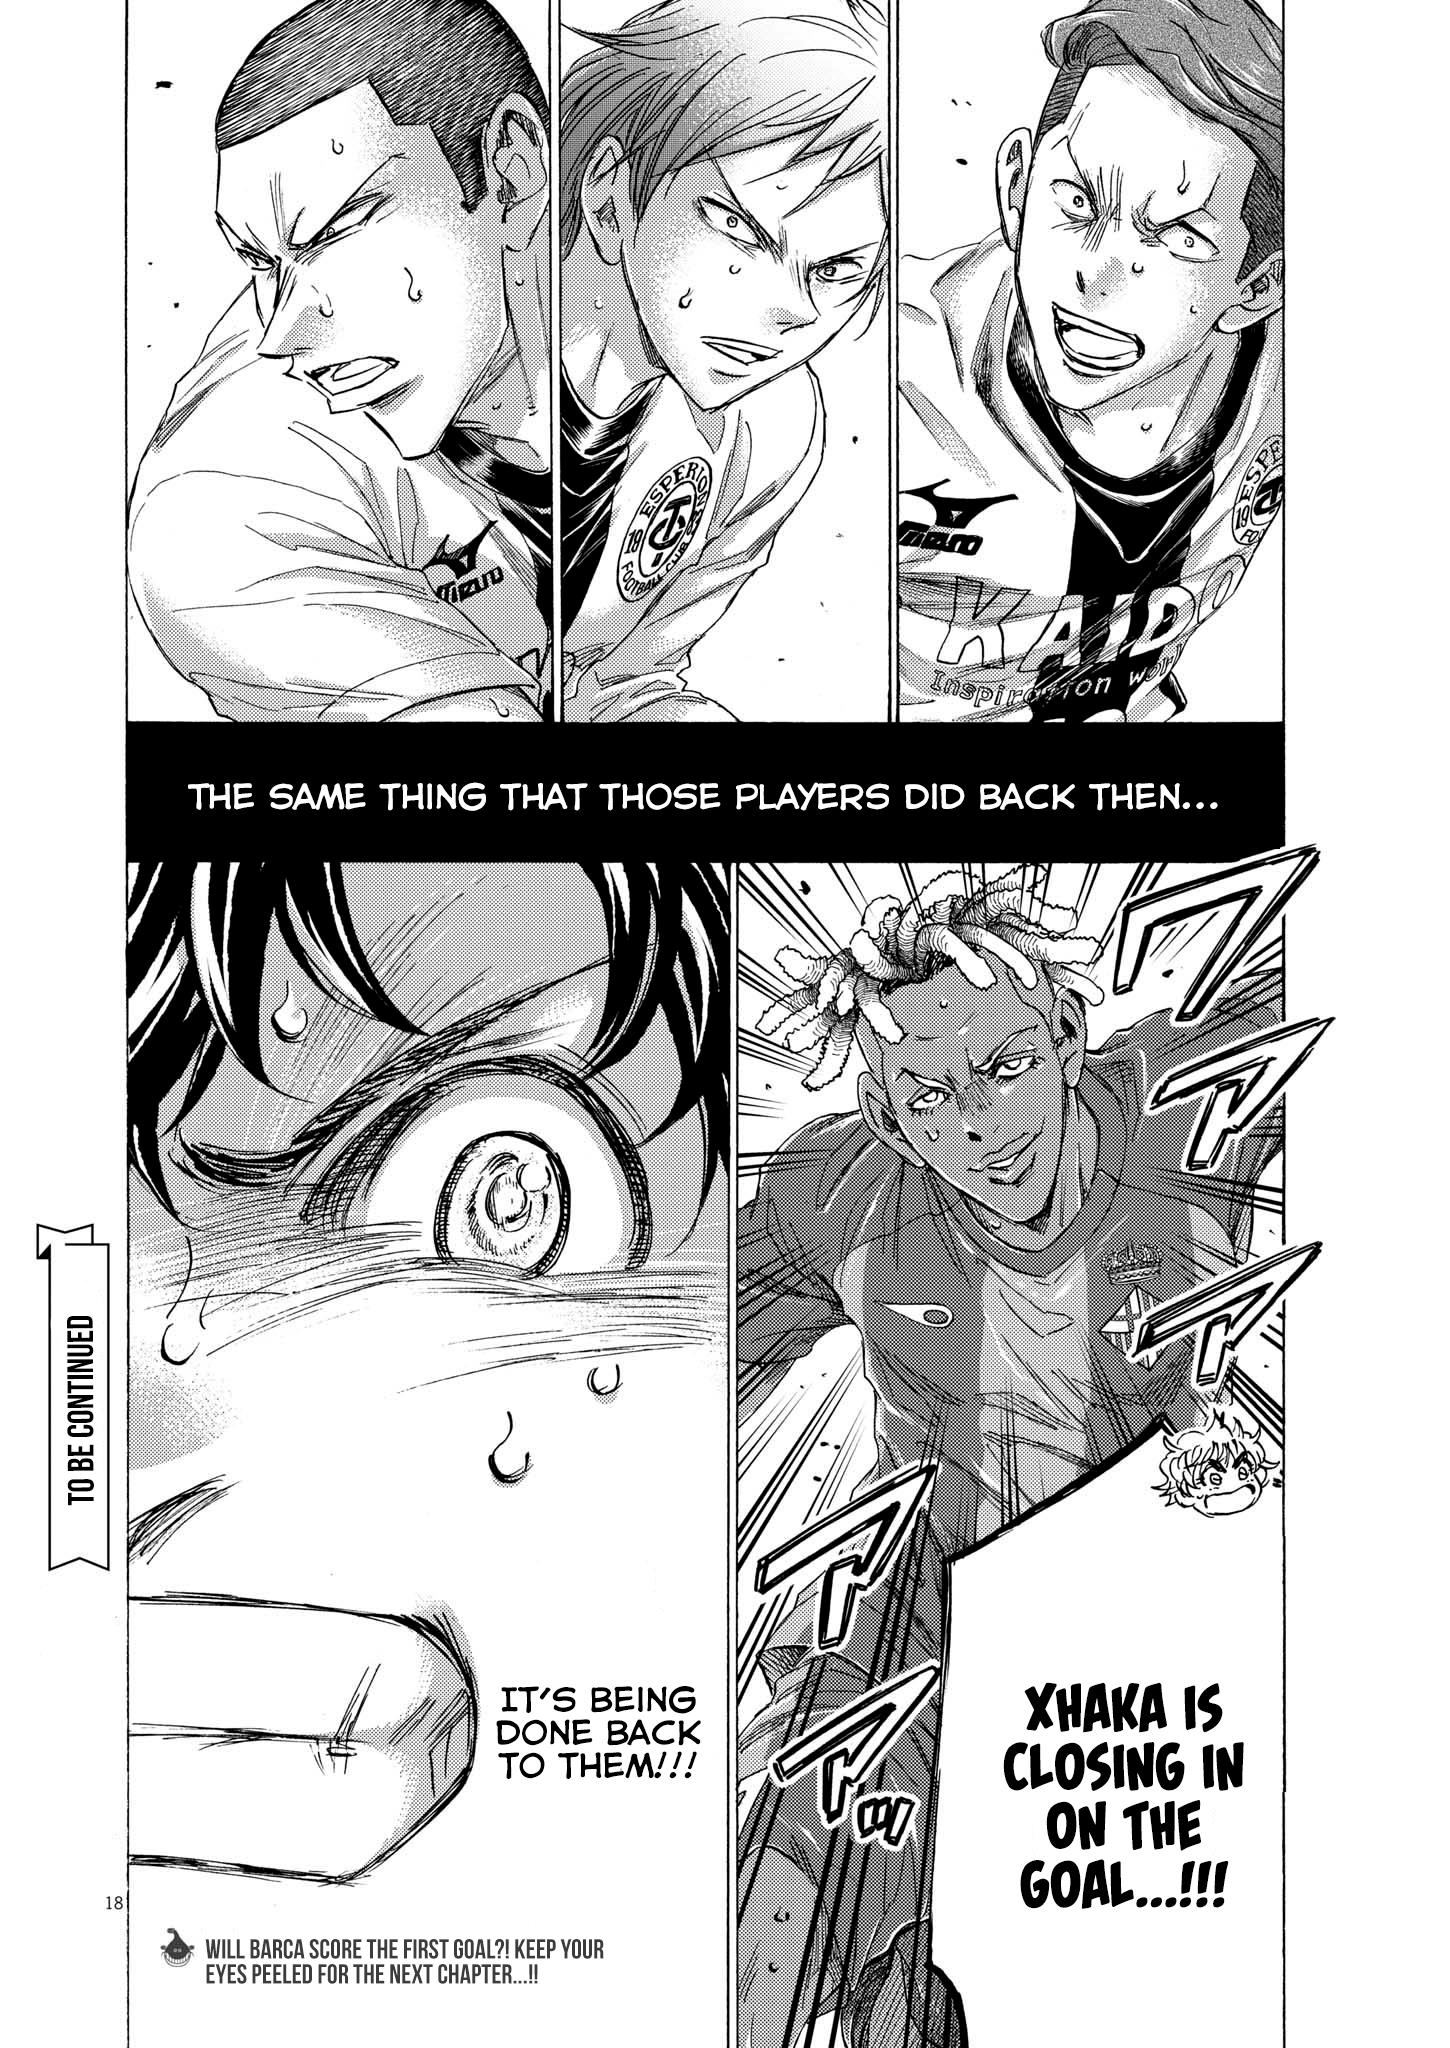 Puncak Pertandingan! Baca Manga Ao Ashi Chapter 353 Bahasa Indonesia,  Spoiler, dan Jadwal Rilisnya